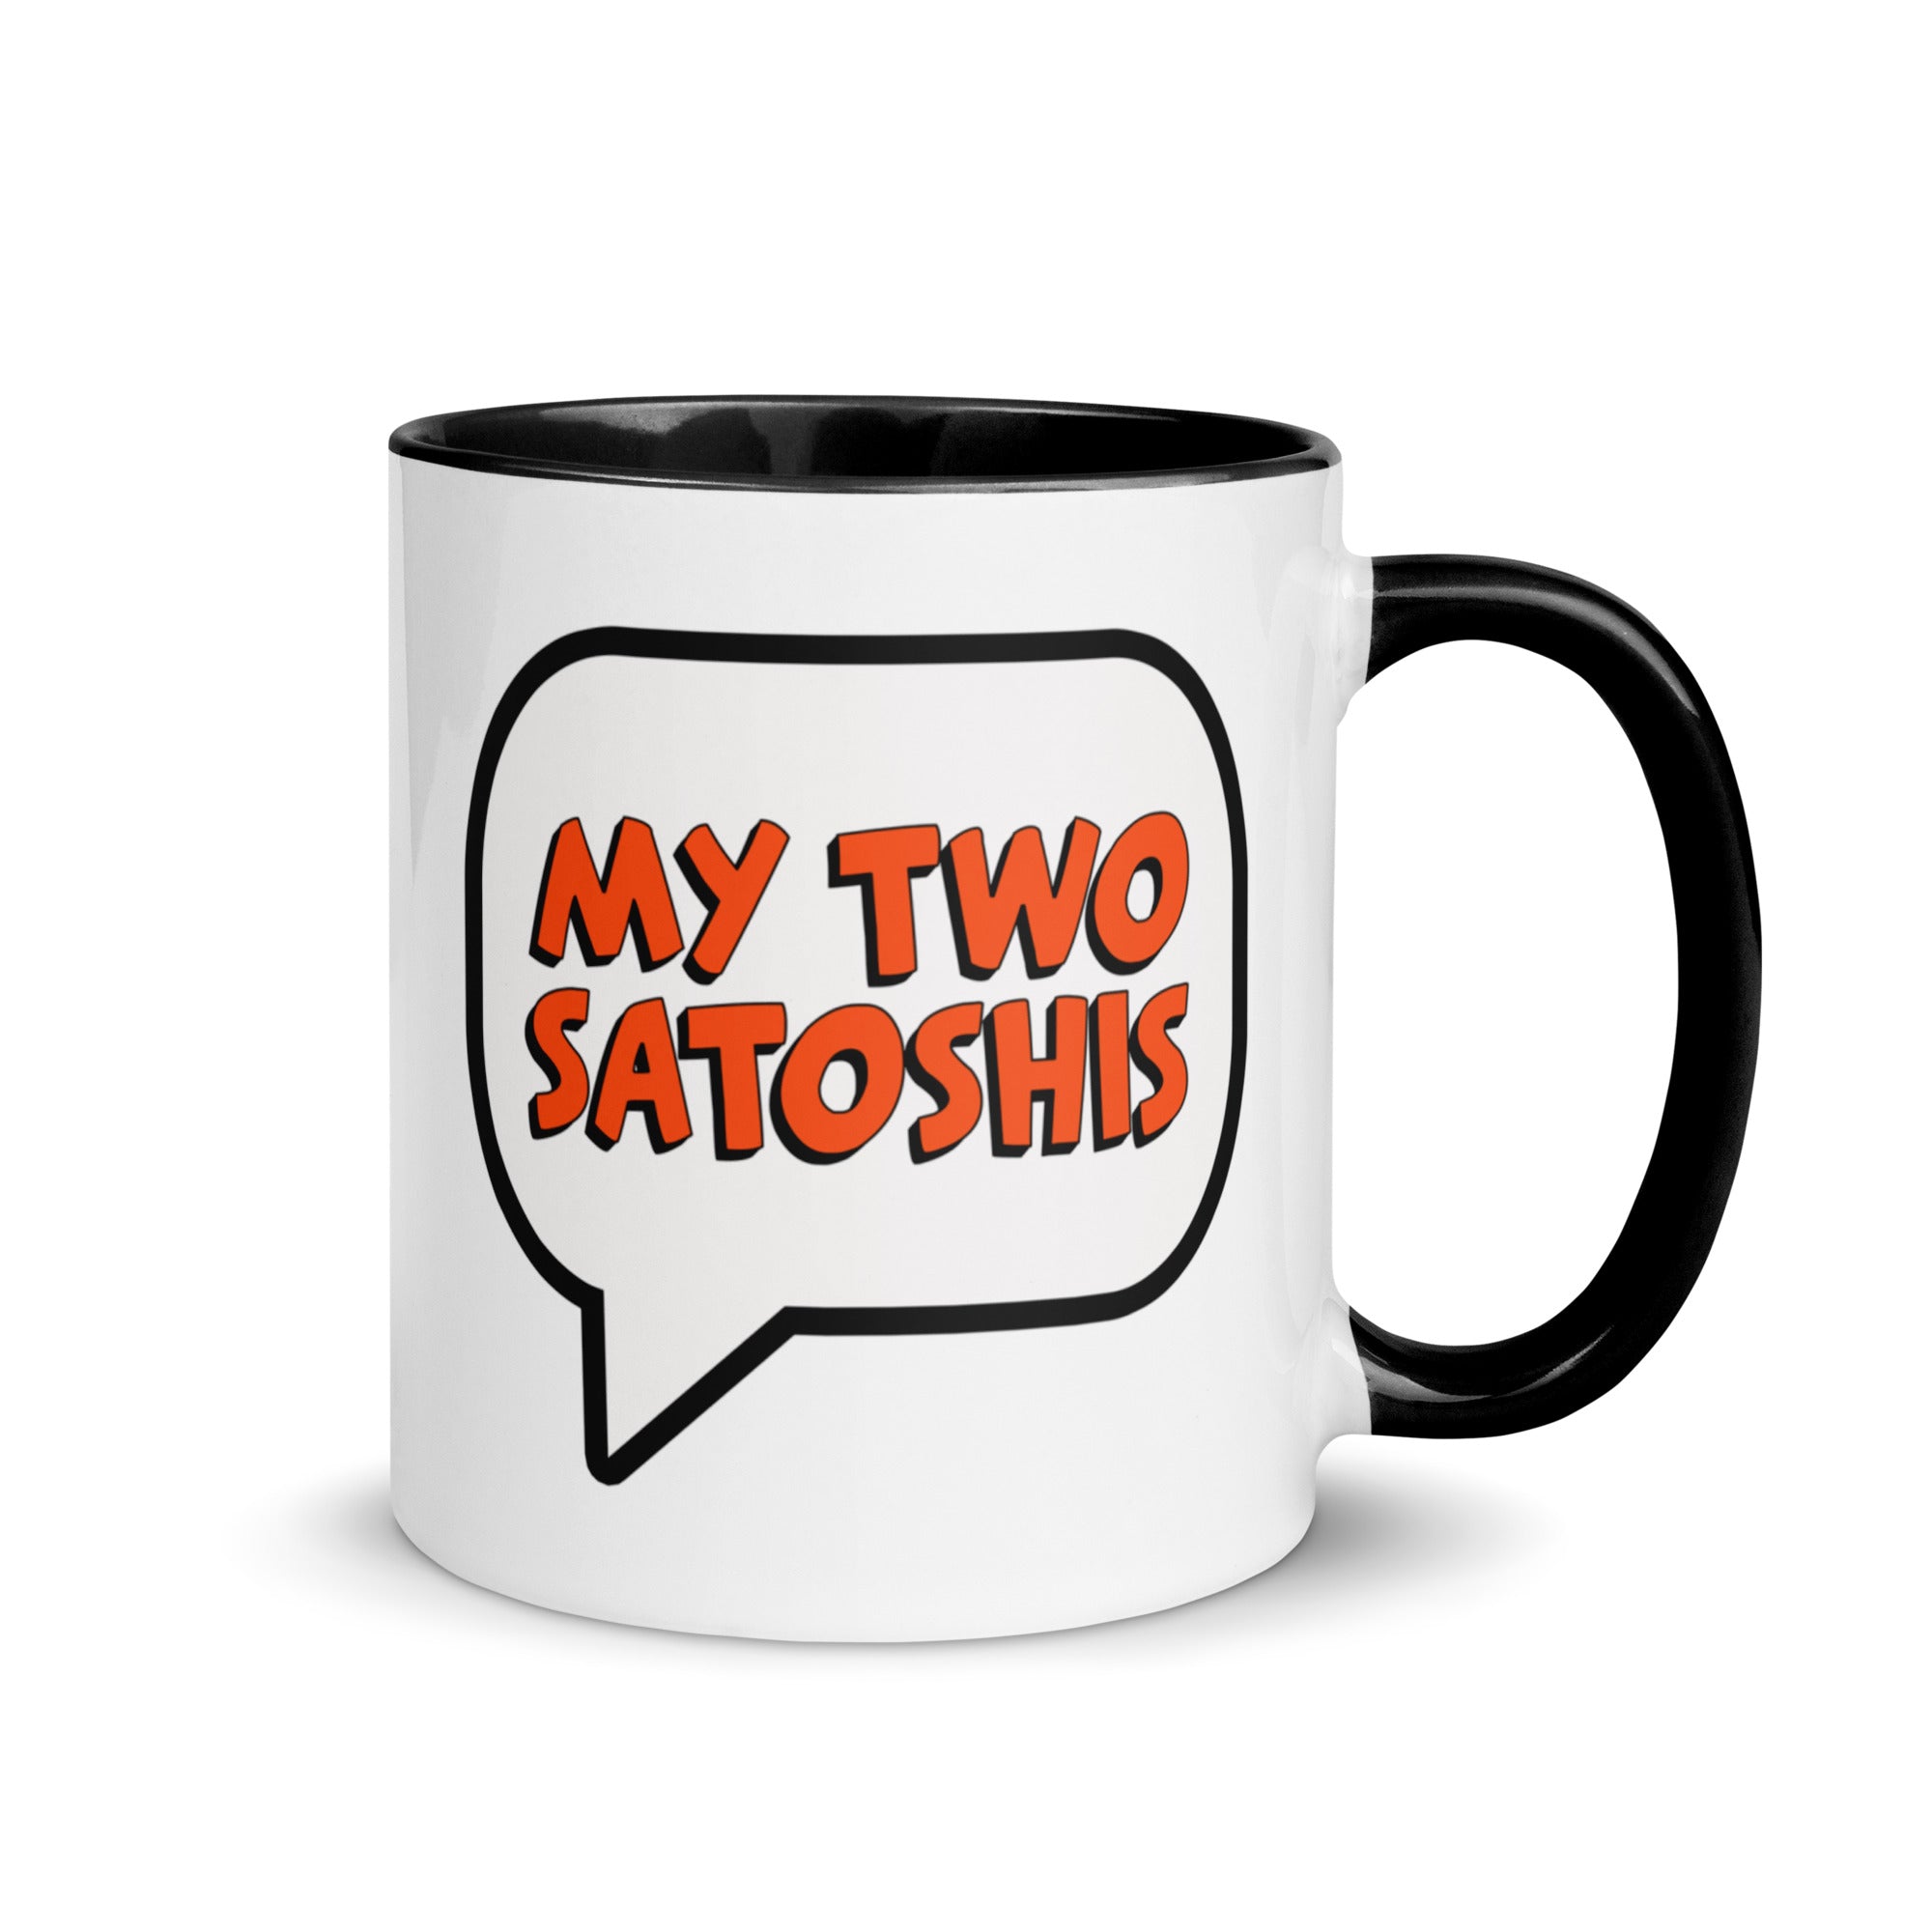 Bitcoin Merchandise - My Two Satoshis Mug. Right handle view.